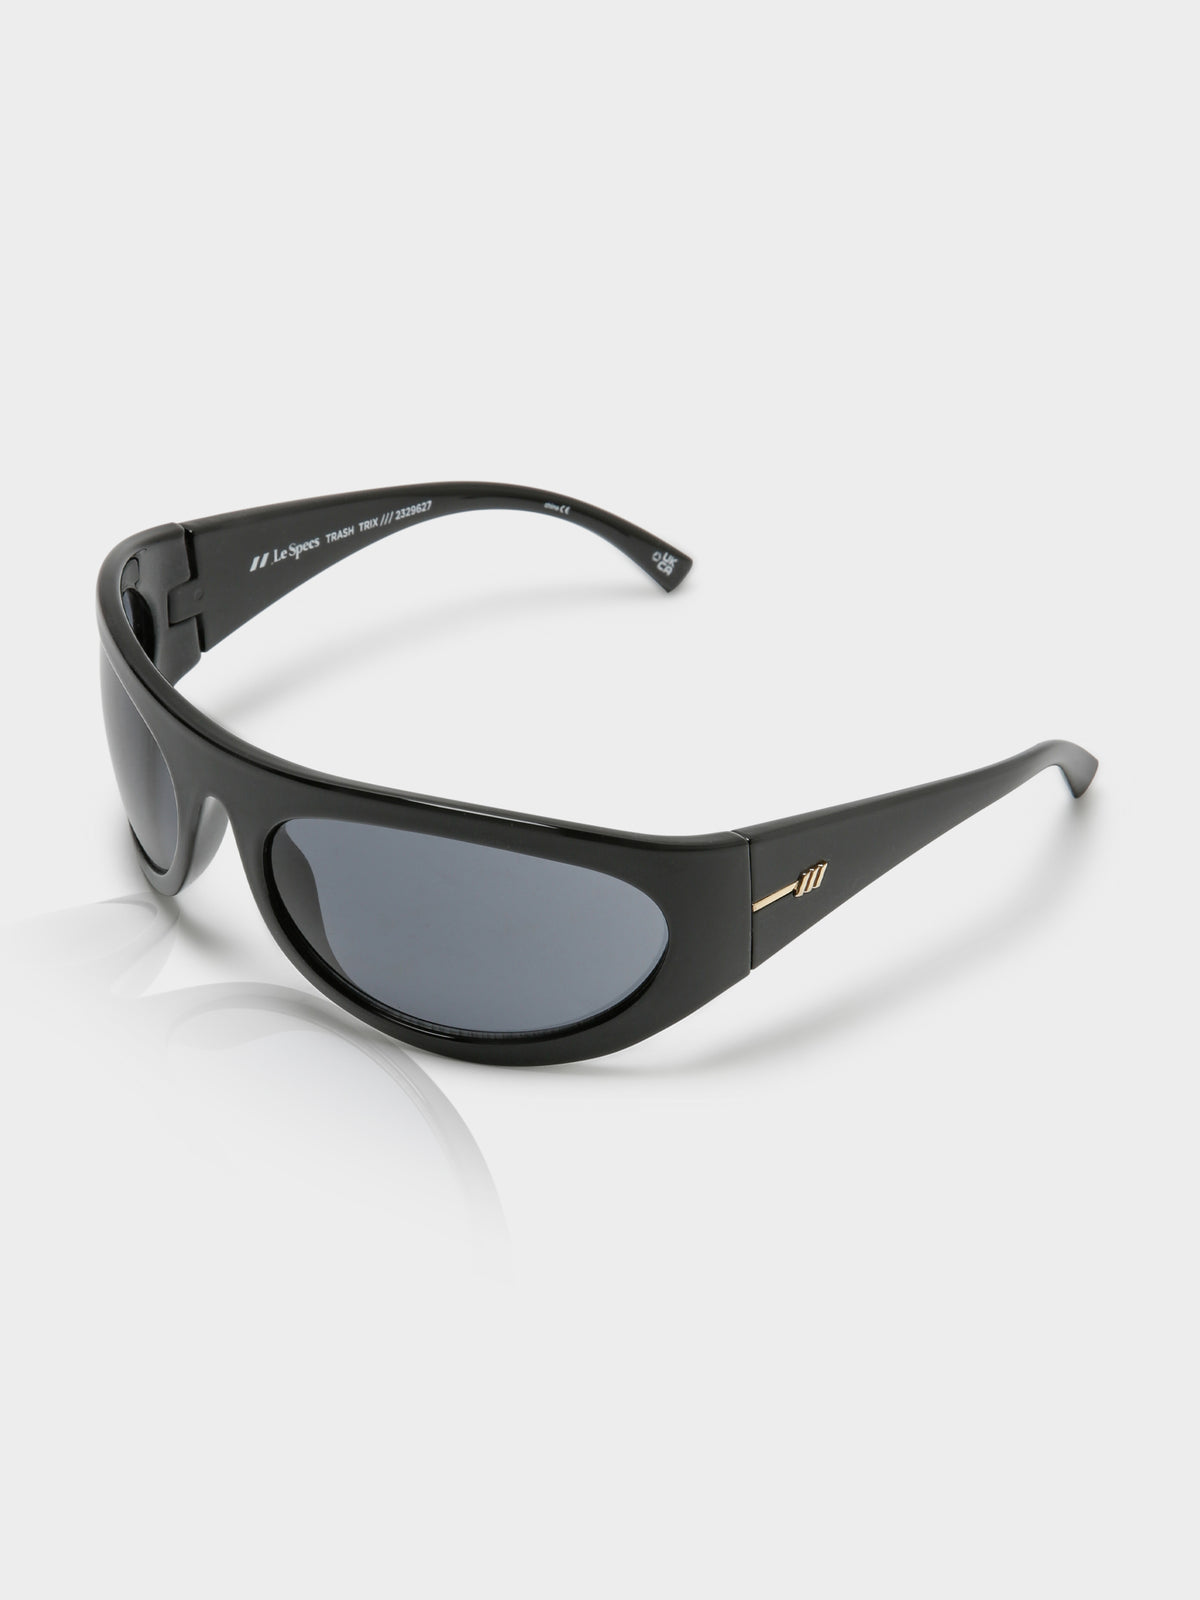 Trash Trix Sunglasses in Black Smoke